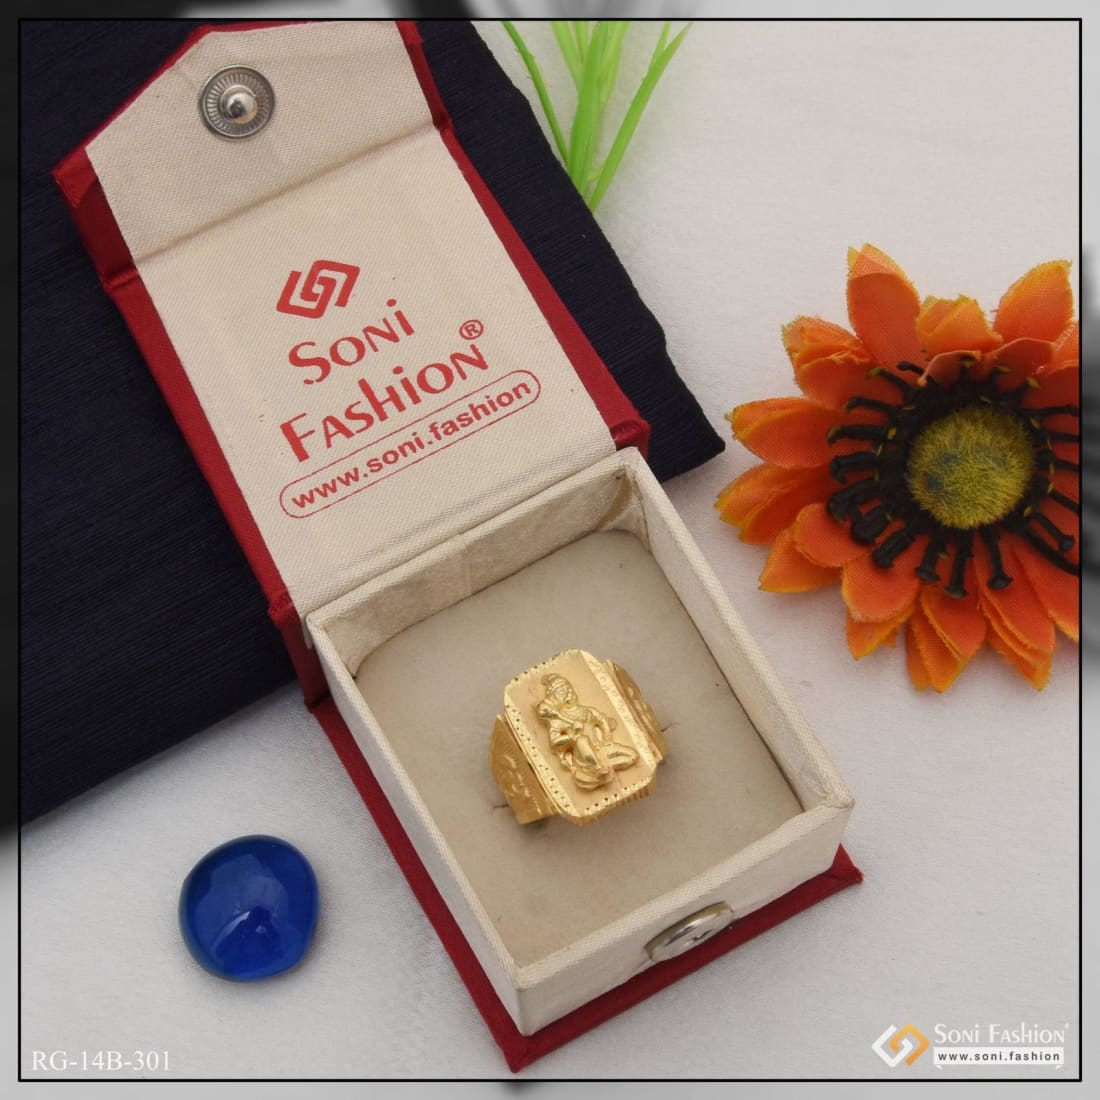 3 Grams Gold earrings new Latest design | Model From GRT jewellers -  YouTube | Gold earrings designs, Gold bride jewelry, Gold earrings models